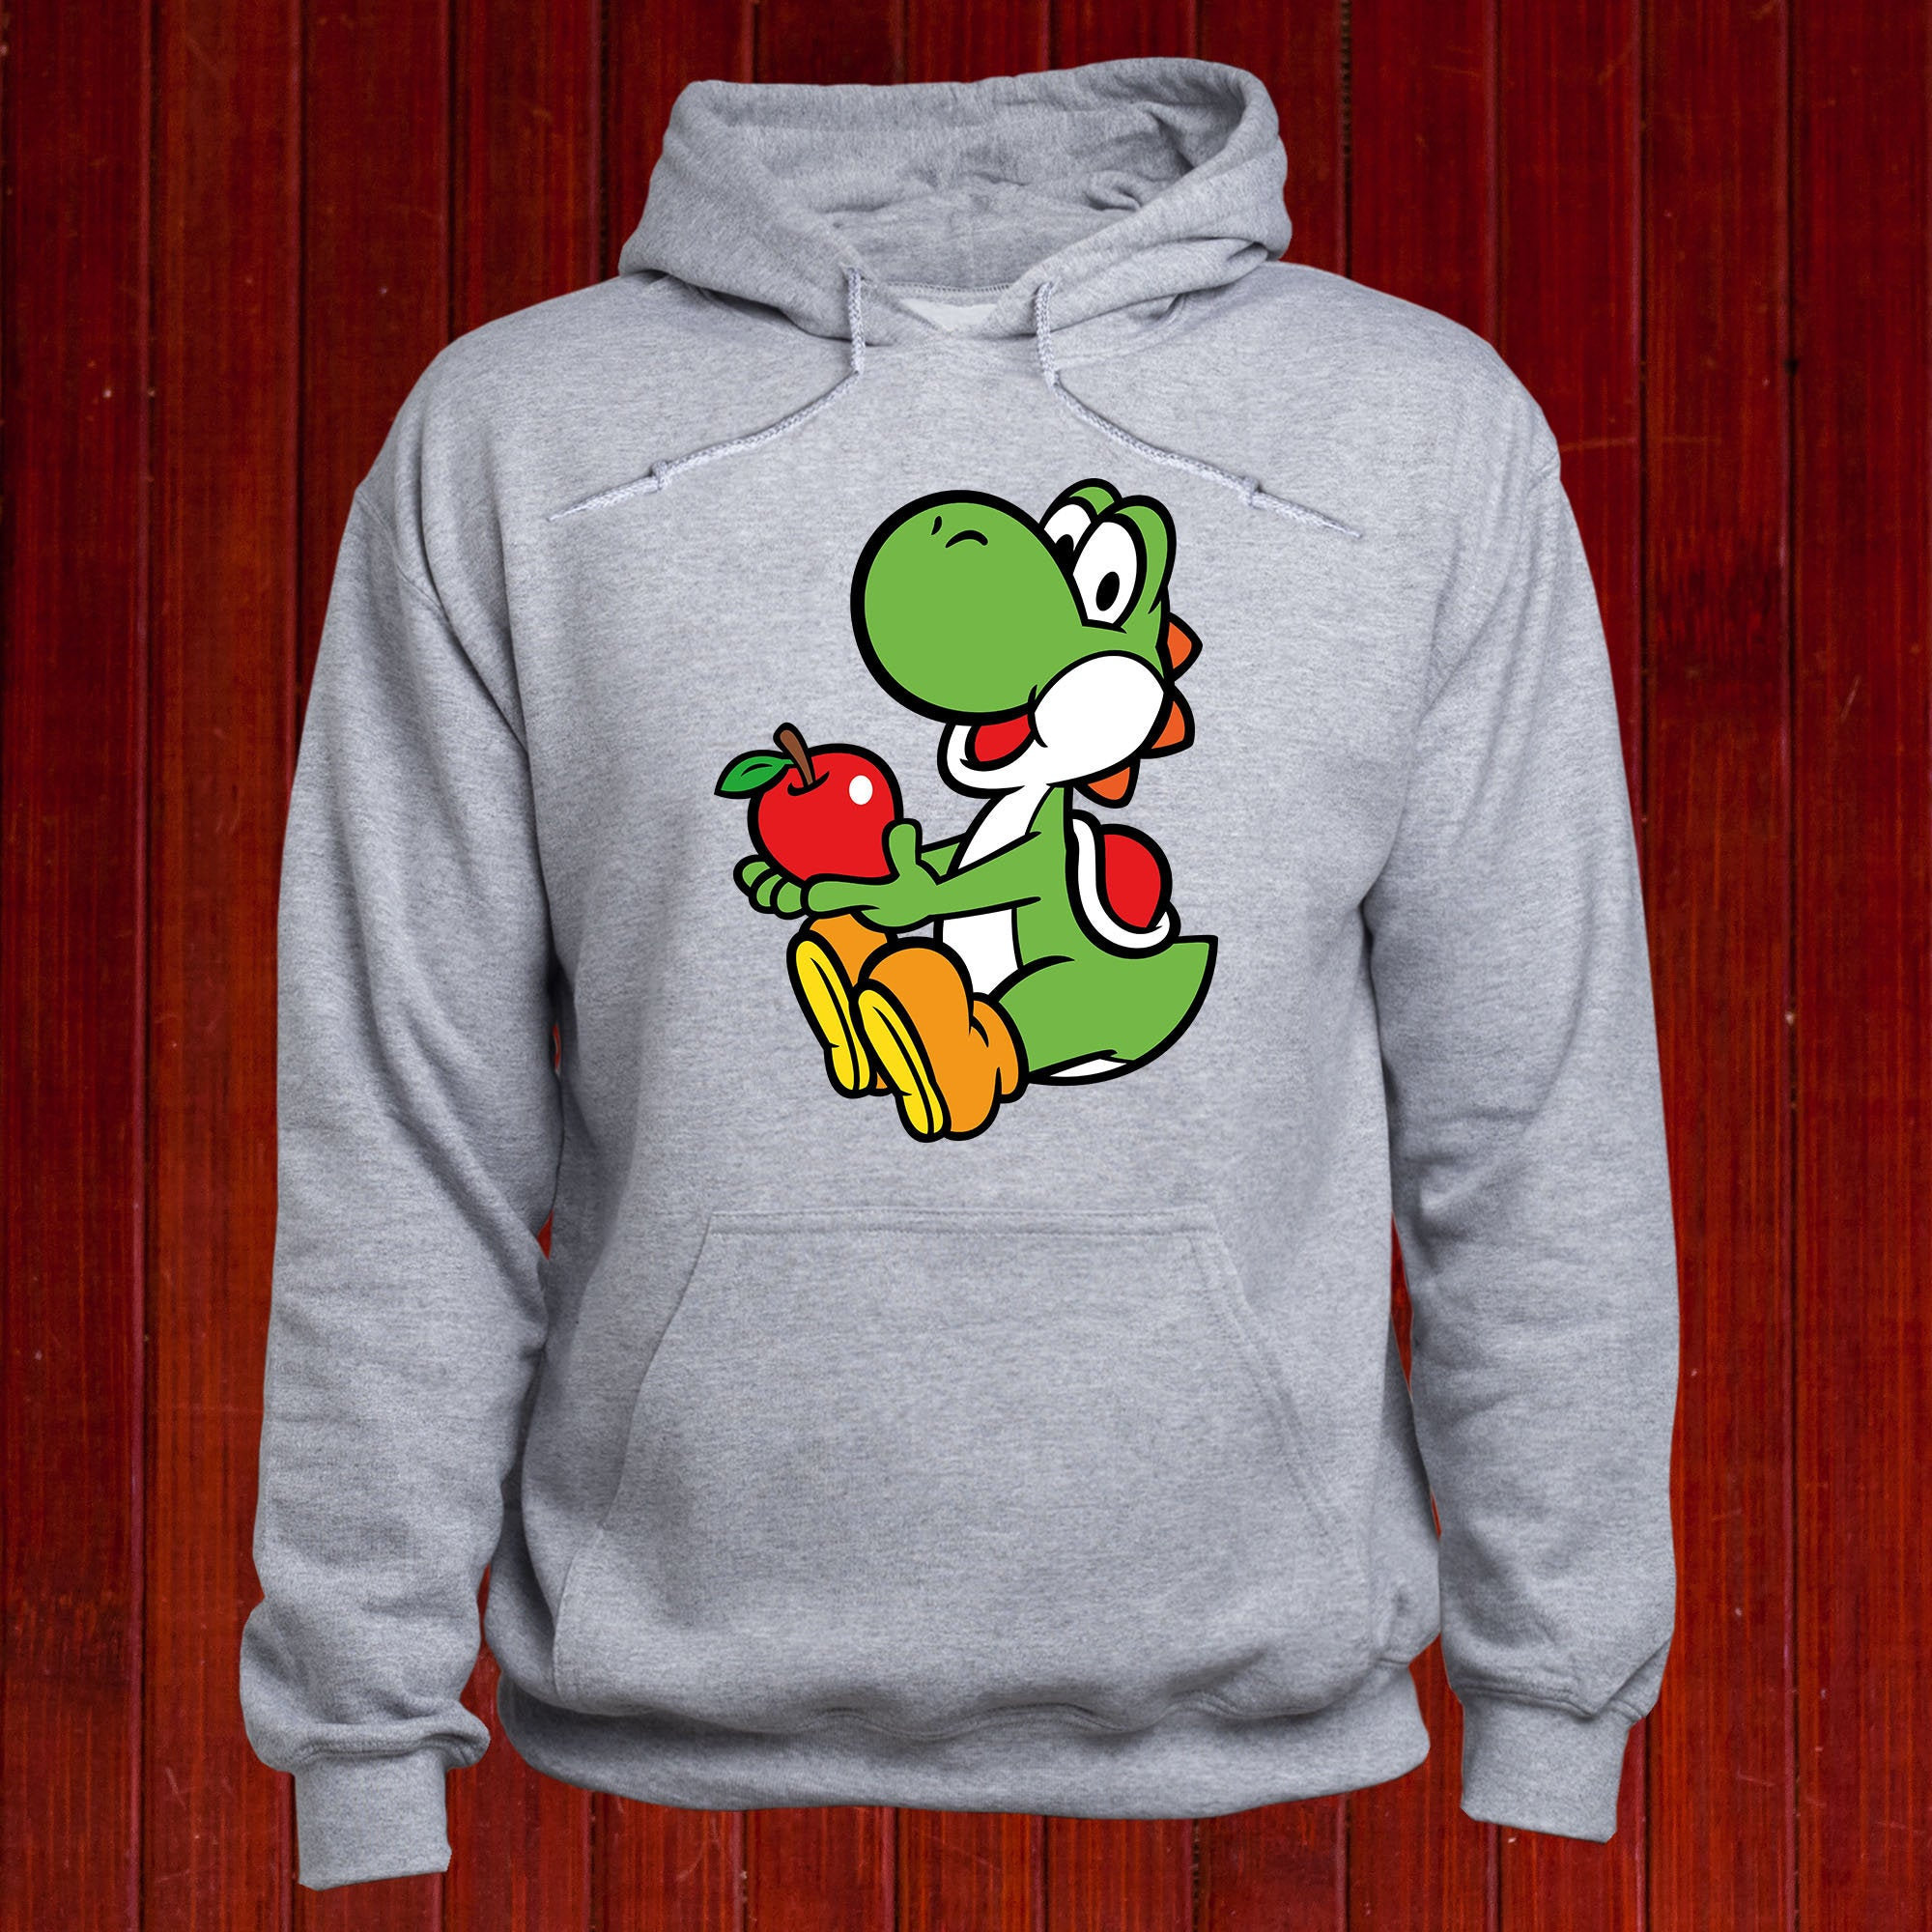 Discover Yoshi sweatshirt/ Super Mario jumper/ Mario pullover/ Super Smash Bros hoodie/ Gaming sweater/ Retro game hoody/ Video game hoodie/ (T58)